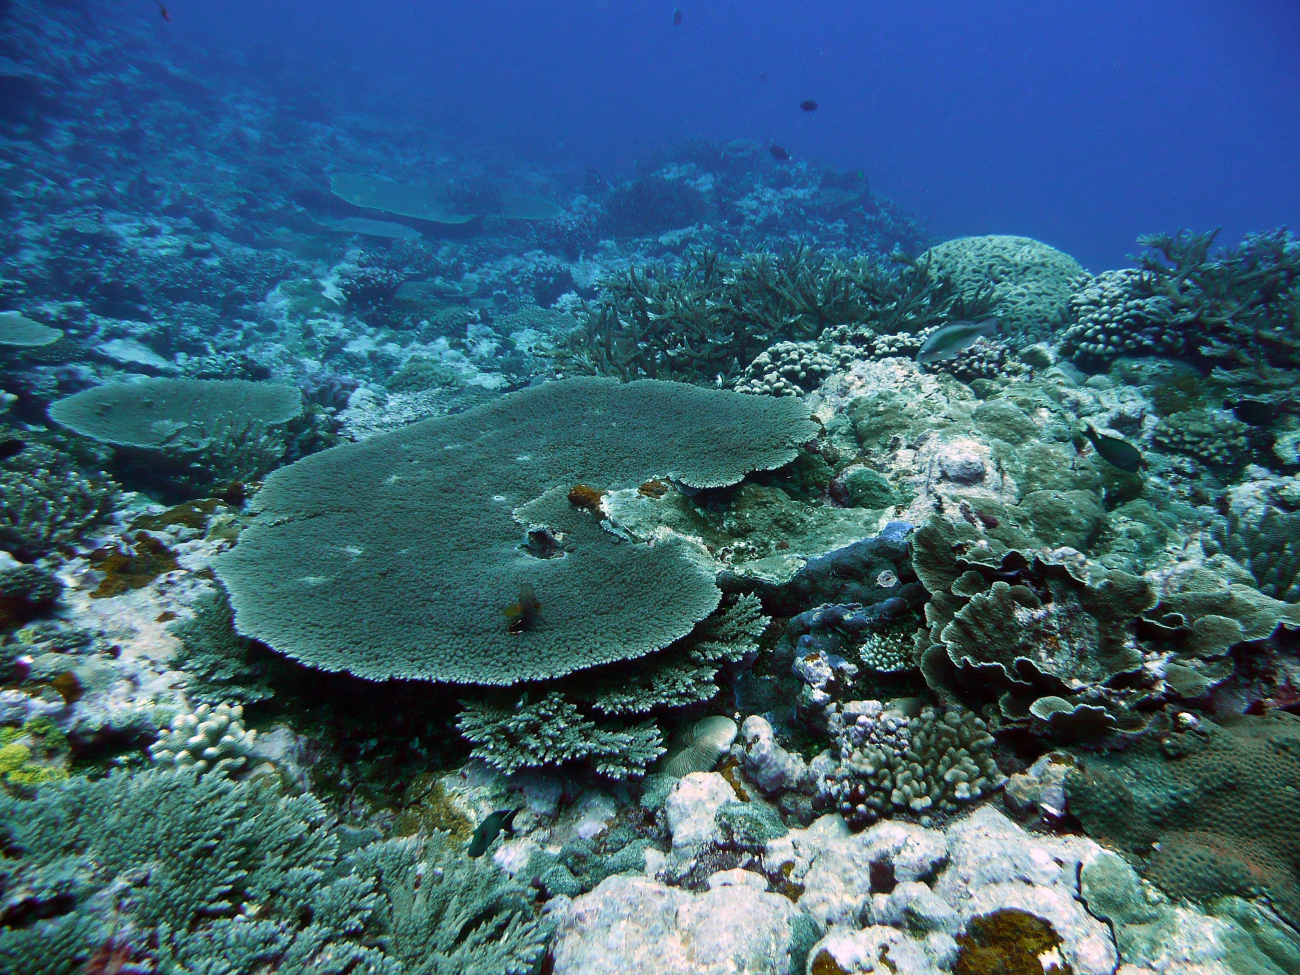 Large tabular coral (Acropora sp